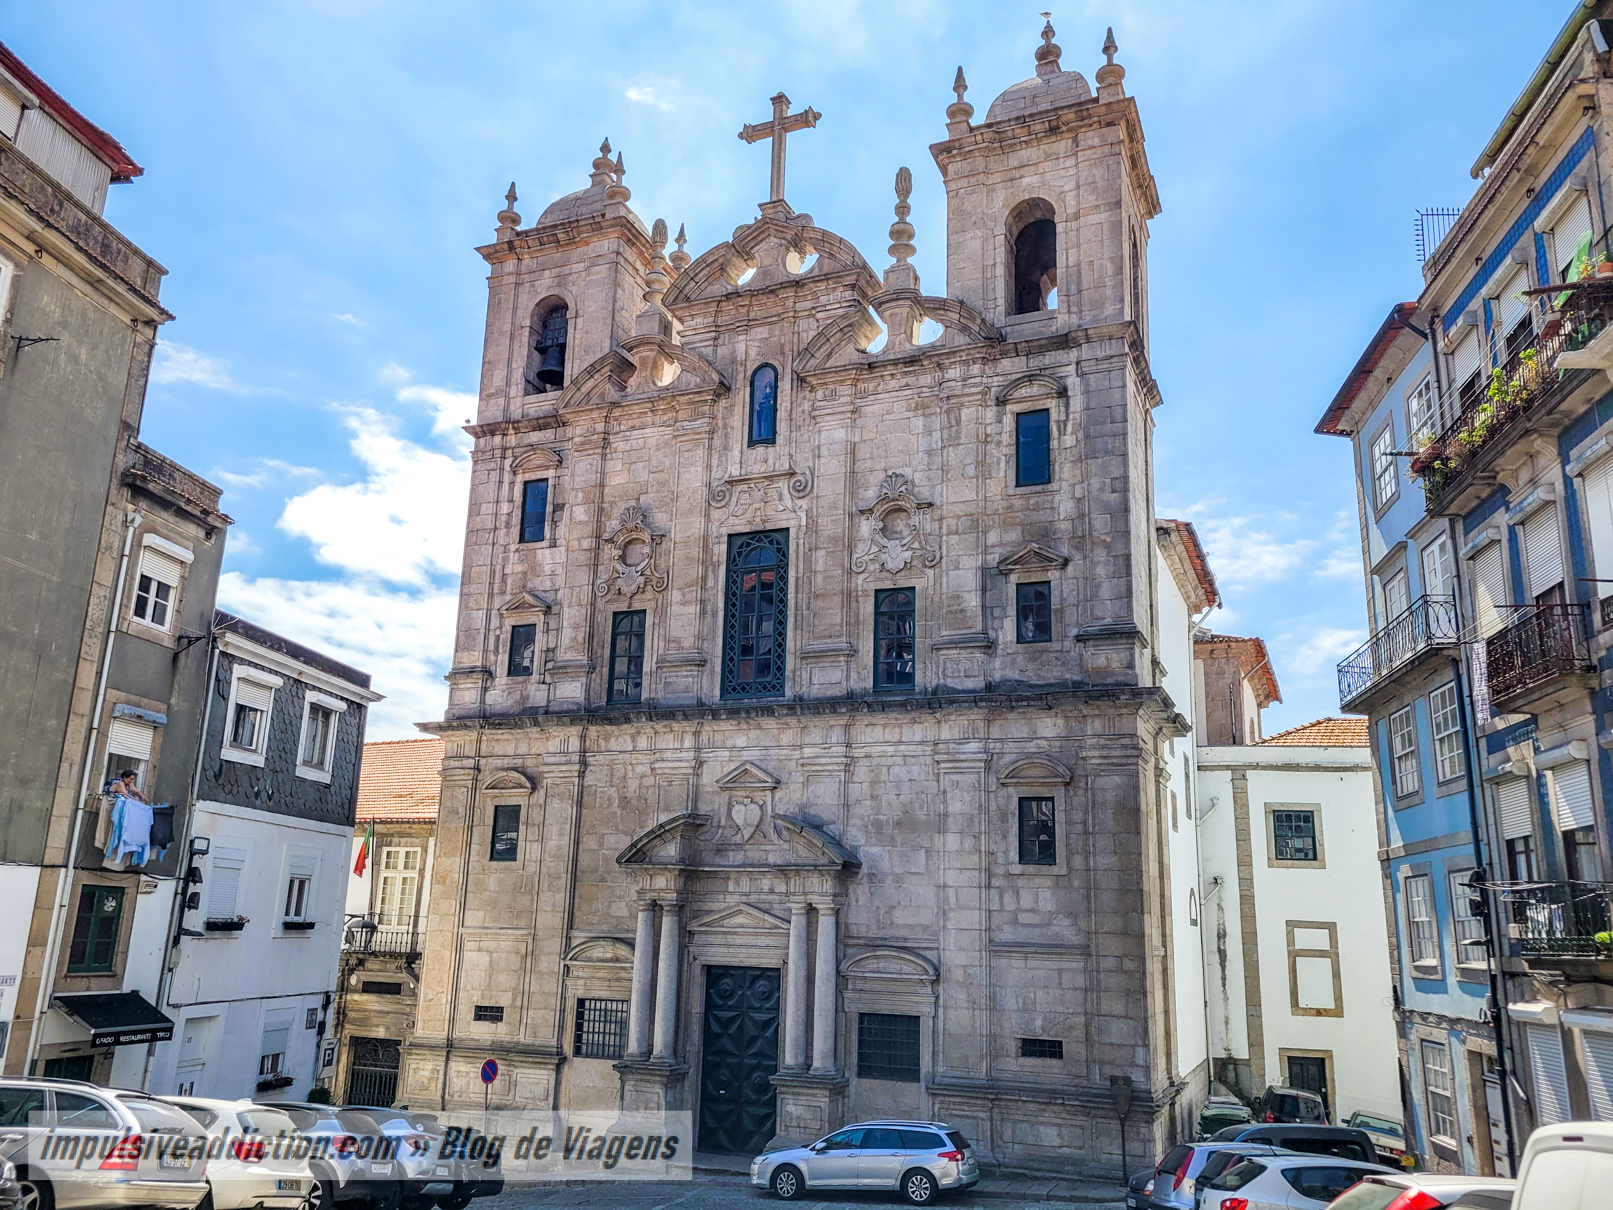 São João Novo Church